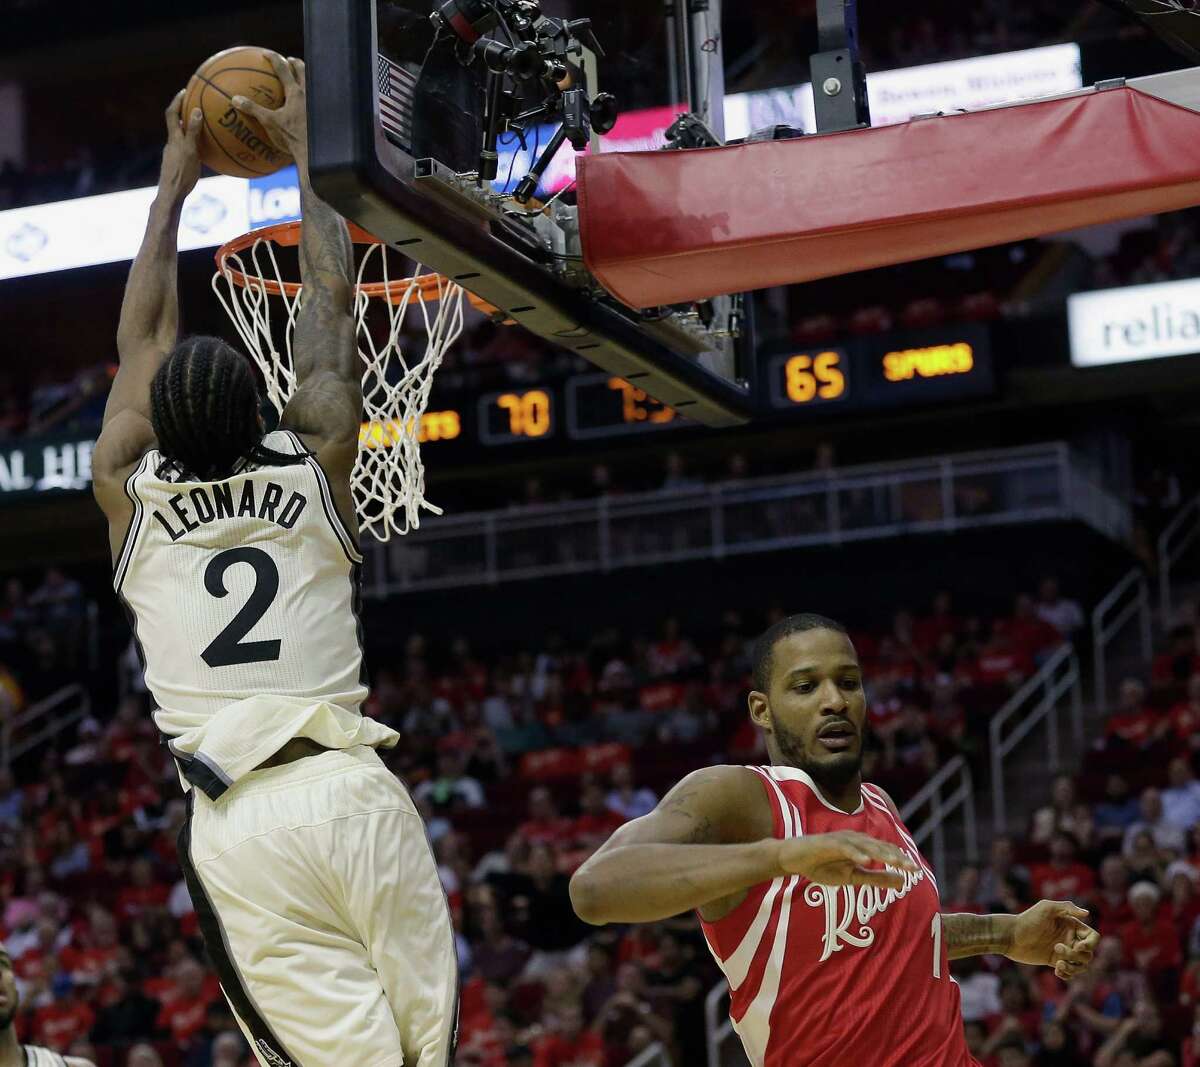 San Antonio Spurs forward Kawhi Leonard (2) dunks as Houston Rockets forward Trevor Ariza (1) runs under the basket in the second half of an NBA basketball game Friday, Dec. 25, 2015, in Houston. Houston won 88-84. (AP Photo/Bob Levey)